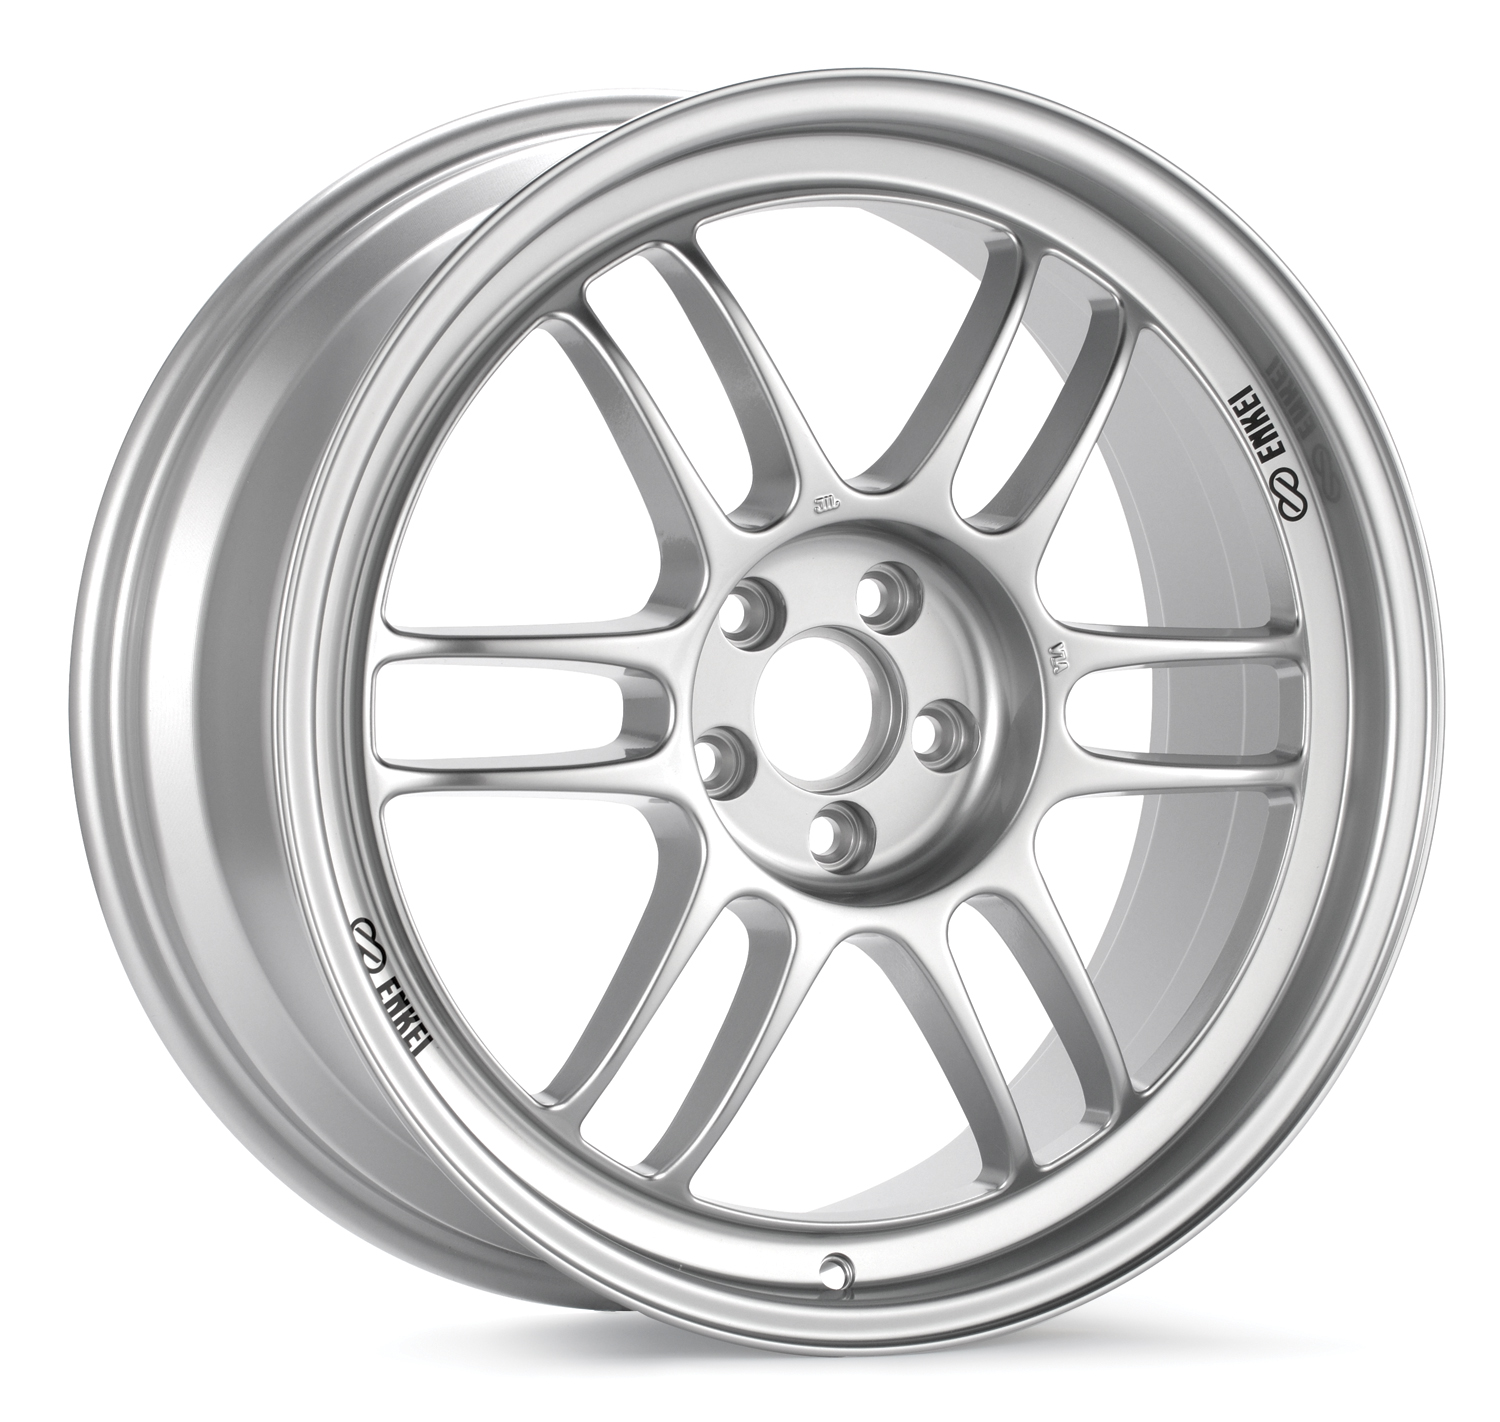 Wheels/Rims 5x120 F1 Silver 3798851240SP 18x8.5 Enkei RPF1 